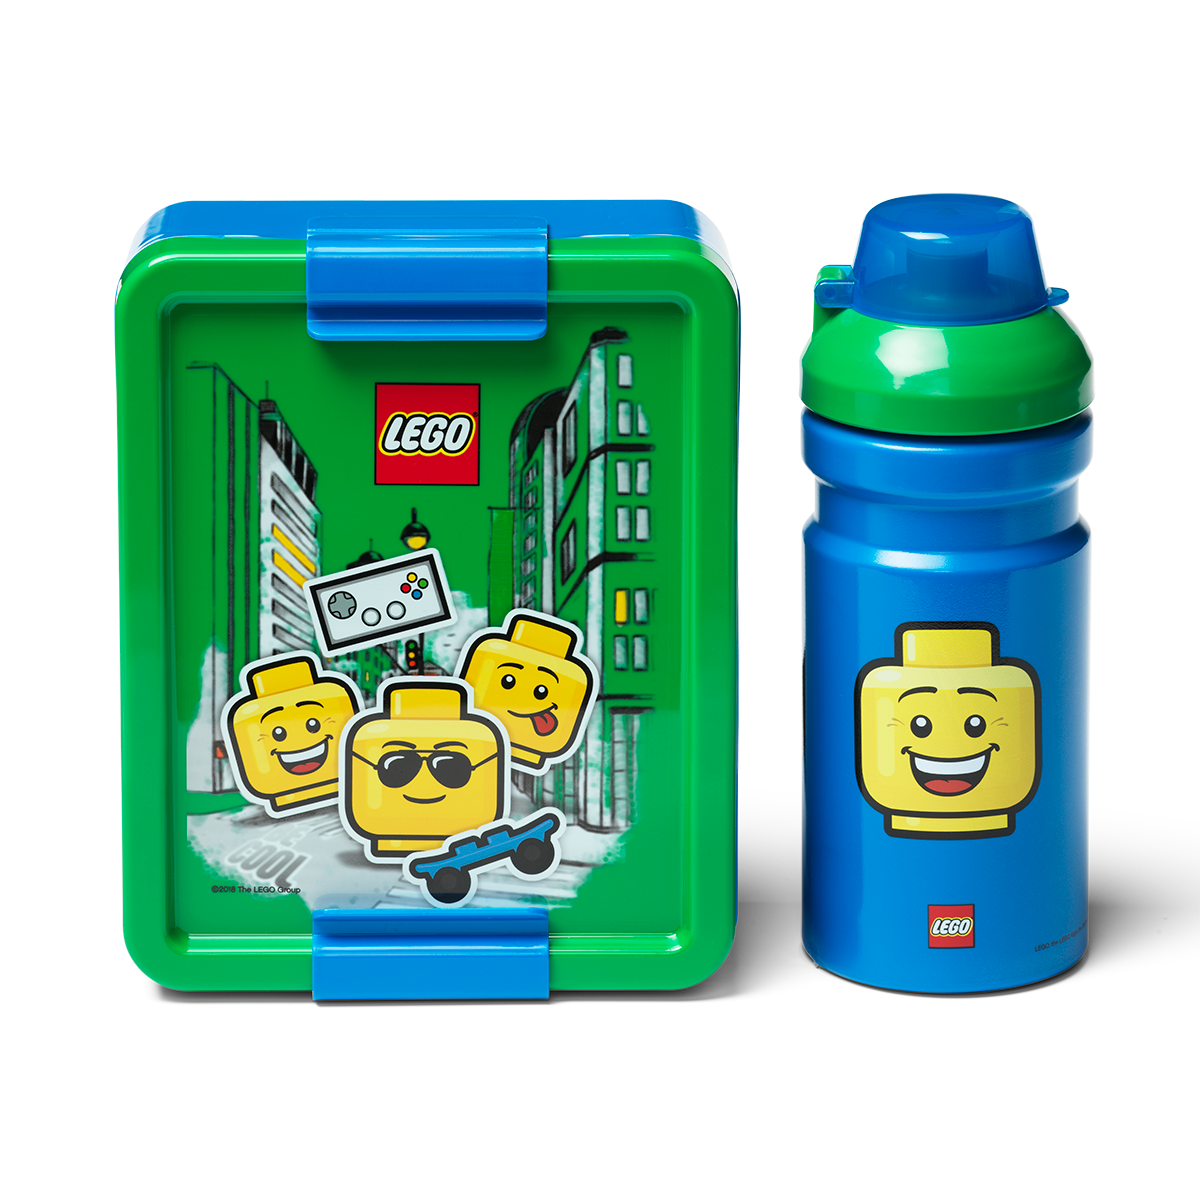 Set Contenedores para Almuerzo Lego Iconic Boy